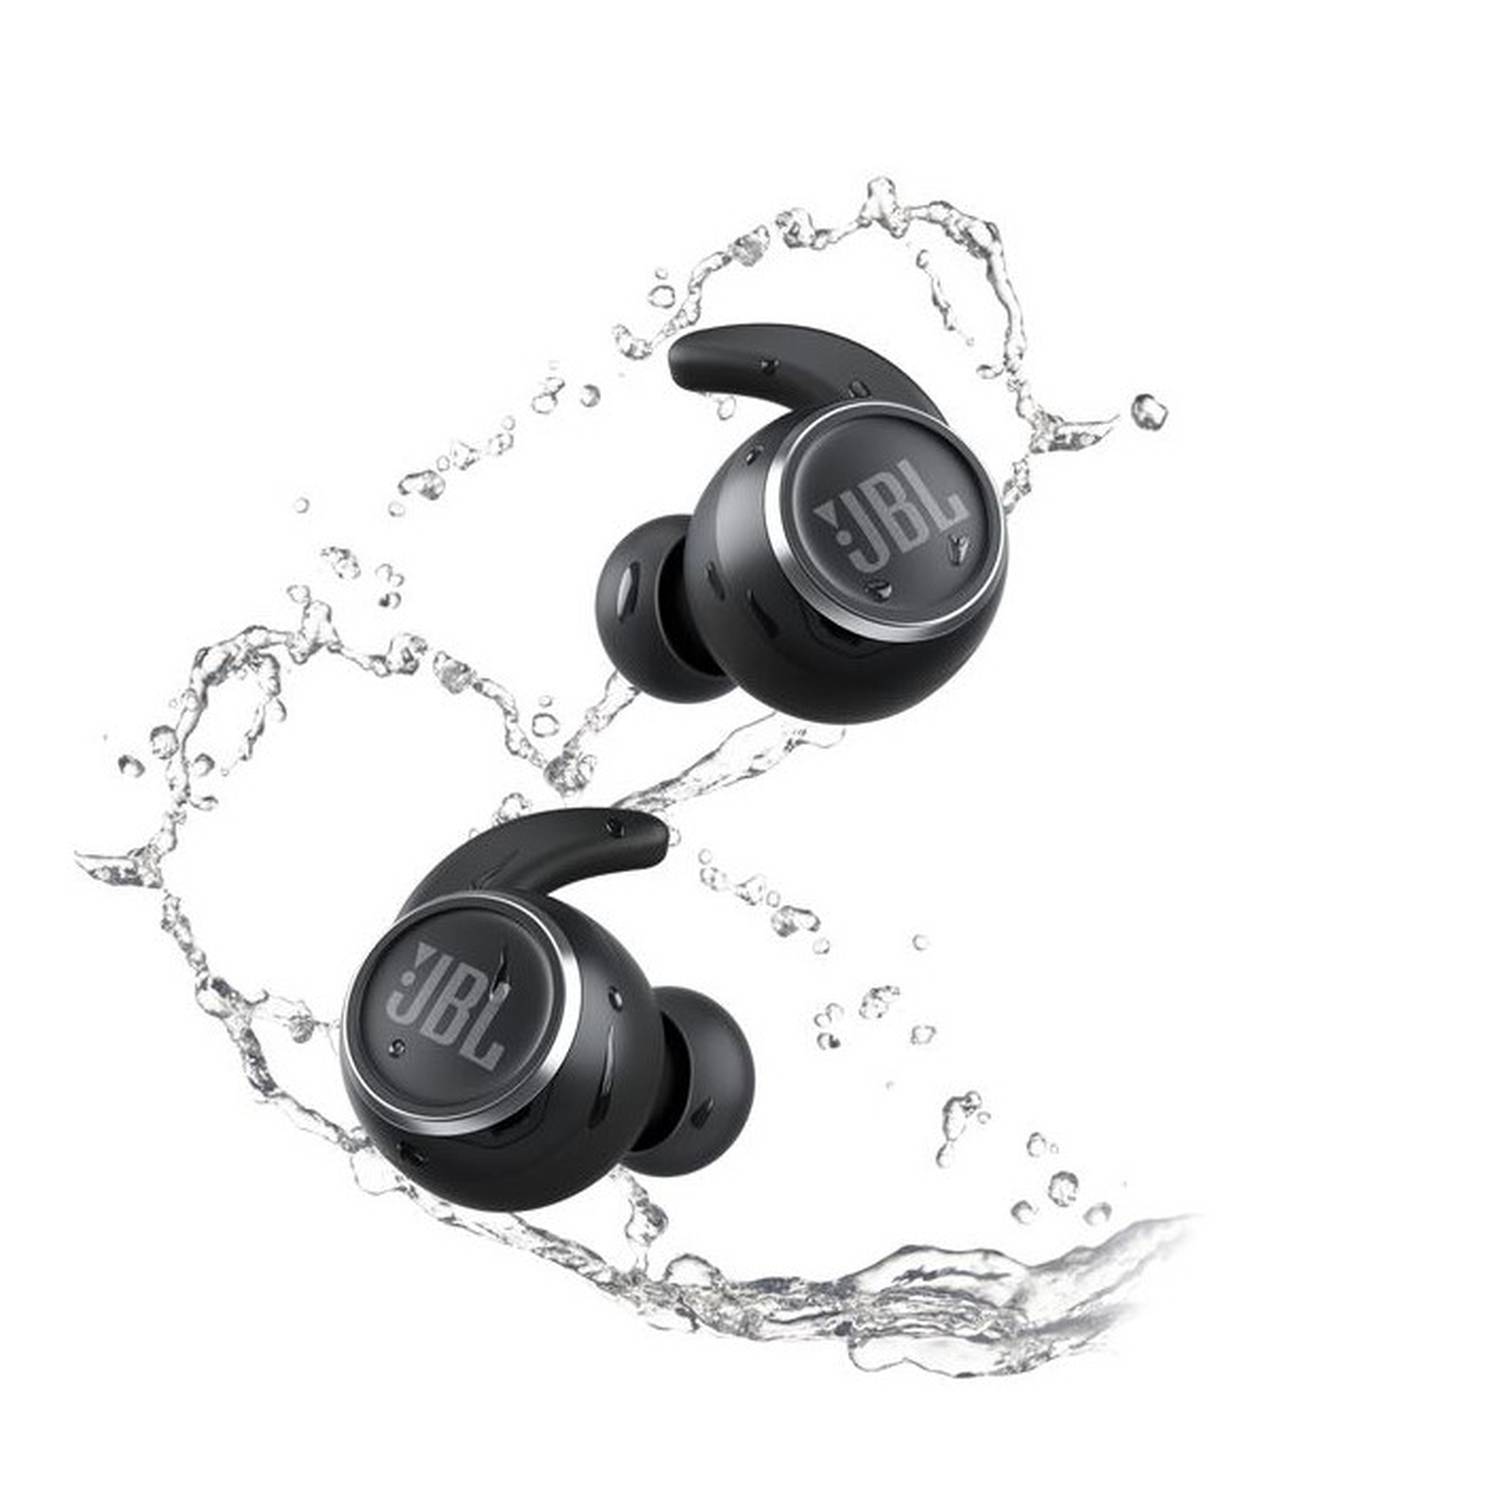 A1 Yy64Zj8 Smart Crop C0 5 0 5 1500X1500 70 Jbl &Lt;H1 Class=&Quot;Product-Title&Quot;&Gt;Jbl Reflect Mini Nc Waterproof True Wireless In-Ear Sport Headphones&Lt;/H1&Gt; Https://Www.youtube.com/Watch?V=X6X4Ai97Rq8 &Lt;Ul&Gt; &Lt;Li&Gt;Active Noise Cancelling With Smart Ambient&Lt;/Li&Gt; &Lt;Li&Gt;21 Hours Of Playtime (7 Hours In Buds / 14 Hours In Case) Active Noise Cancelling&Lt;/Li&Gt; &Lt;Li&Gt;Ear Fin For Secure Fit&Lt;/Li&Gt; &Lt;Li&Gt;Multi Ai Built In&Lt;/Li&Gt; &Lt;Li&Gt;Waterproof With Reflective Accents&Lt;/Li&Gt; &Lt;/Ul&Gt; Jbl Earphones Jbl Reflect Mini Nc Waterproof True Wireless In-Ear Sport Headphones